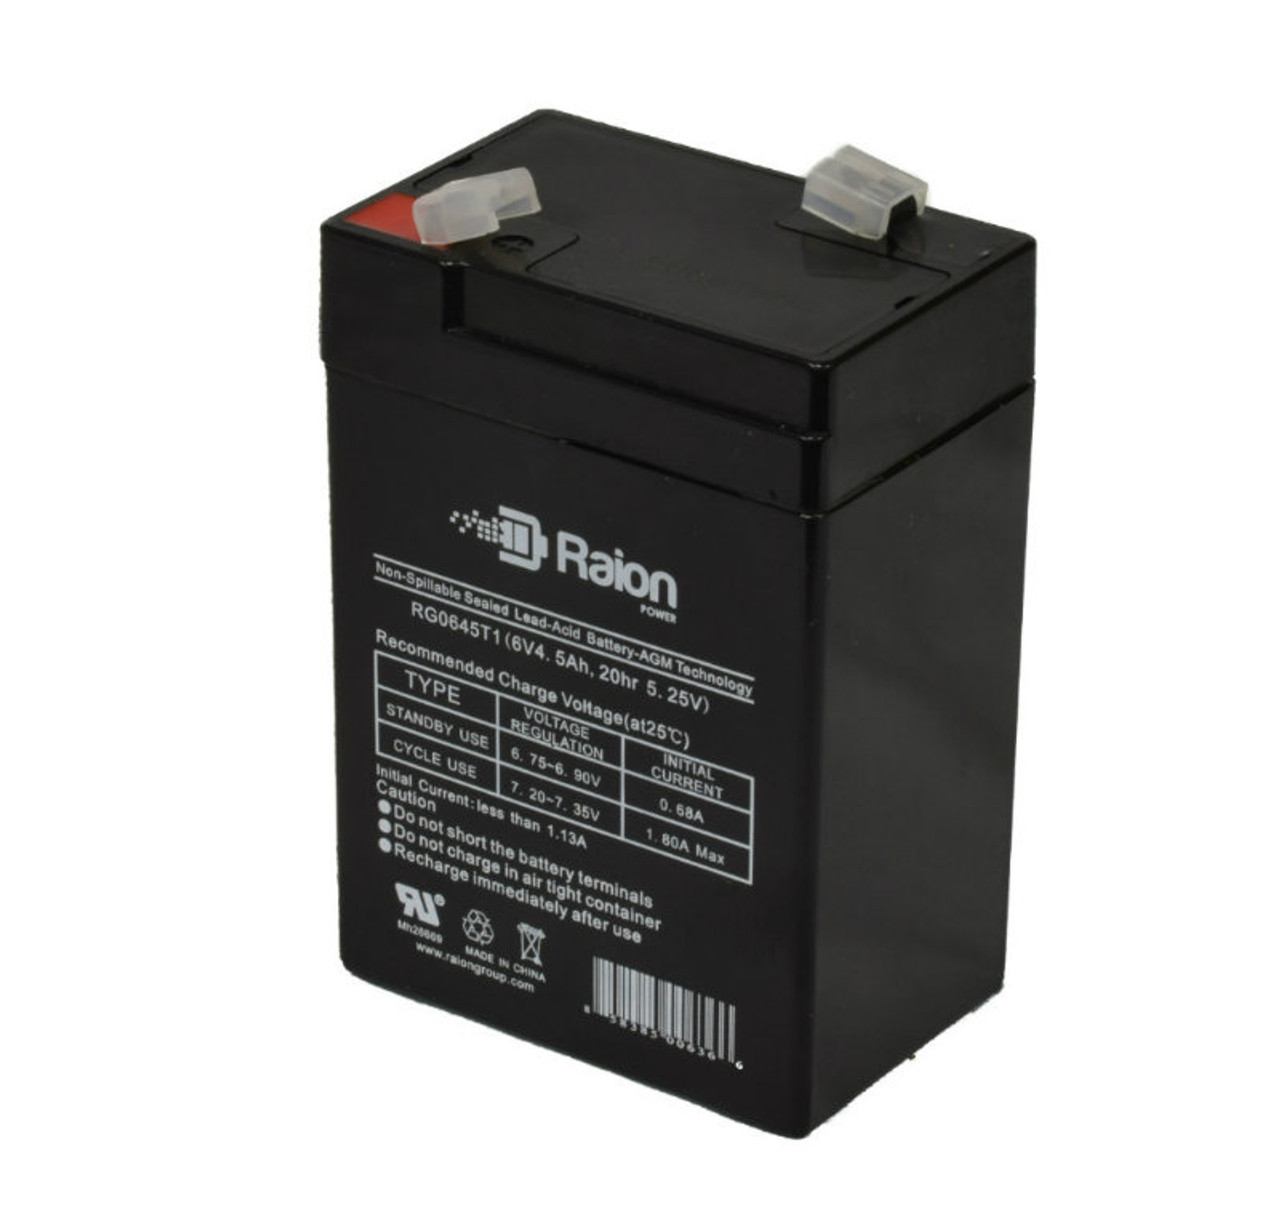 Raion Power RG0645T1 6V 4.5Ah Replacement Battery Cartridge for Peg Perego IGMD0005 6V Mini Ducati